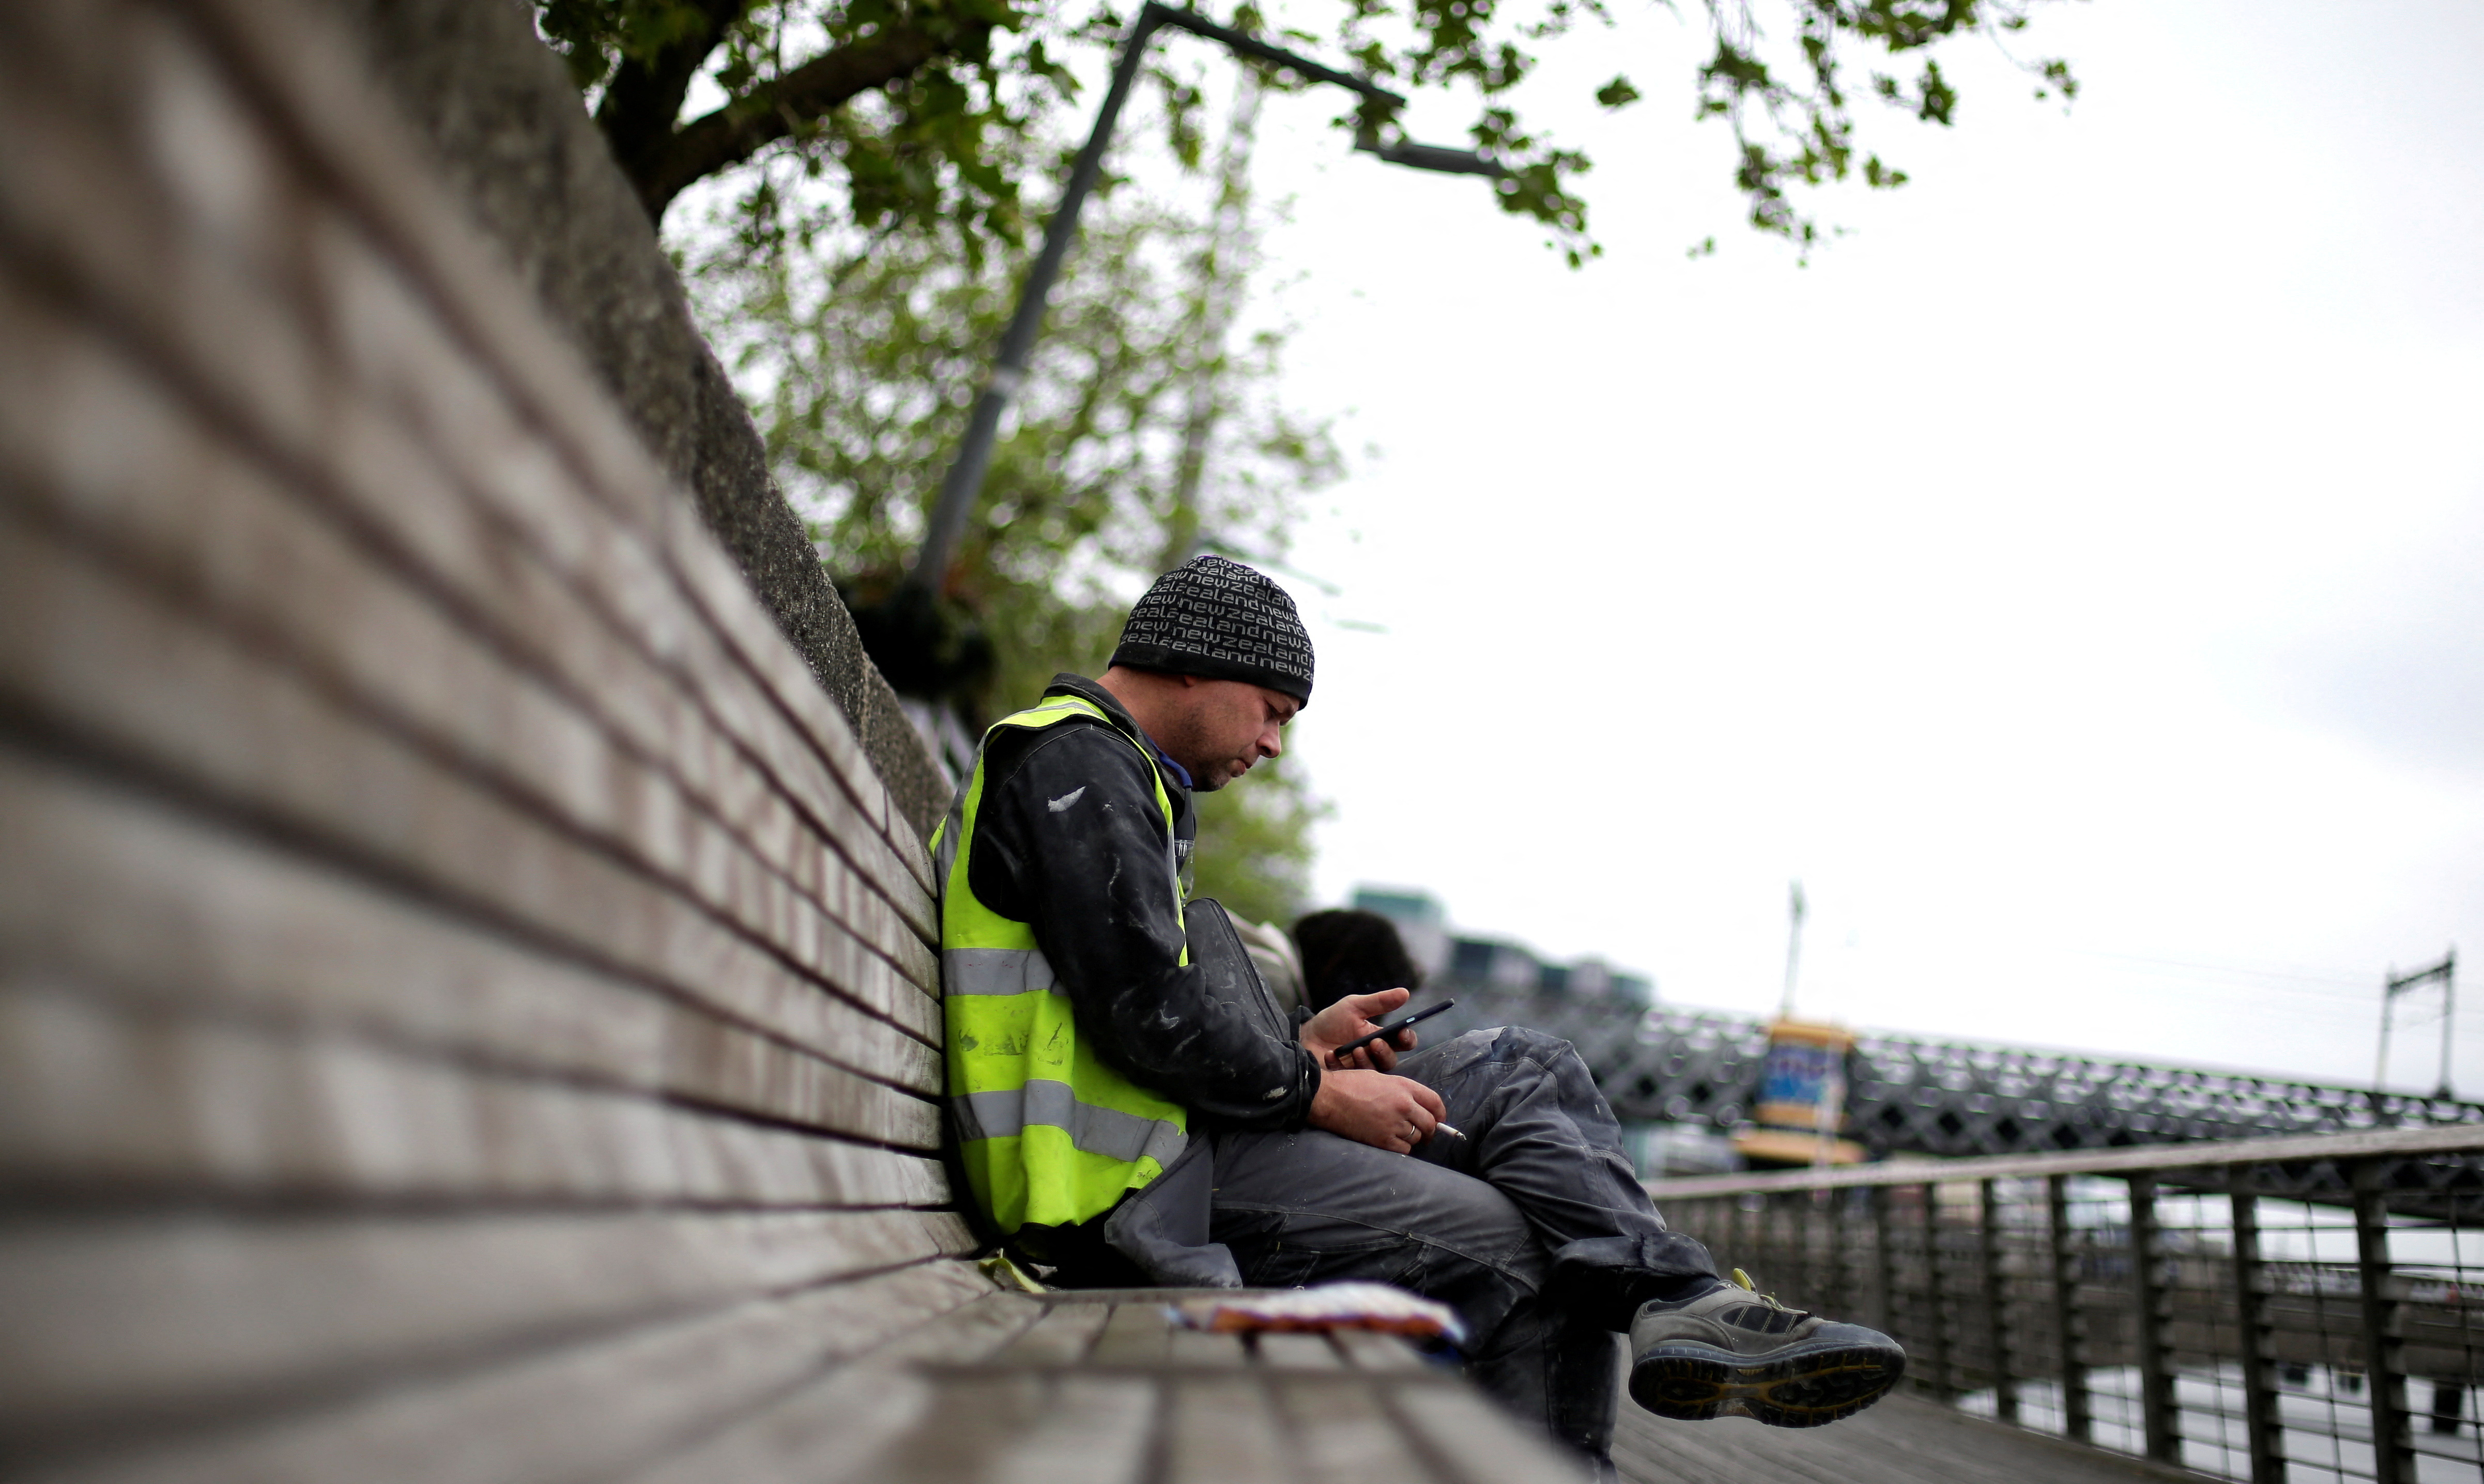 A man checks his phone in the city centre of Dublin